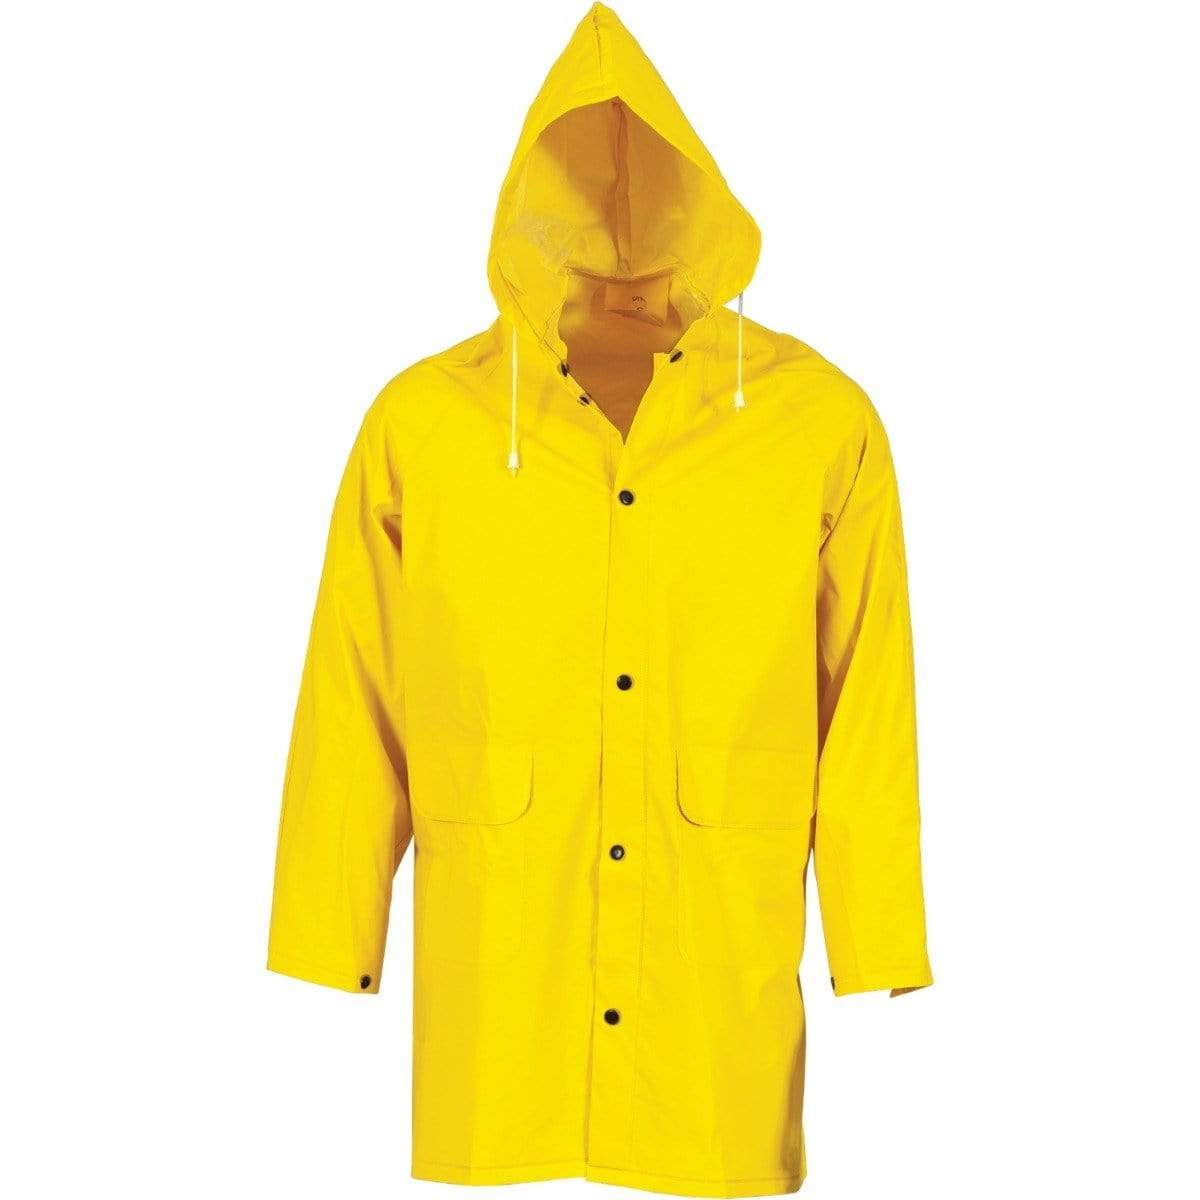 Dnc Workwear Pvc Rain Jacket - 3702 Work Wear DNC Workwear Yellow S 